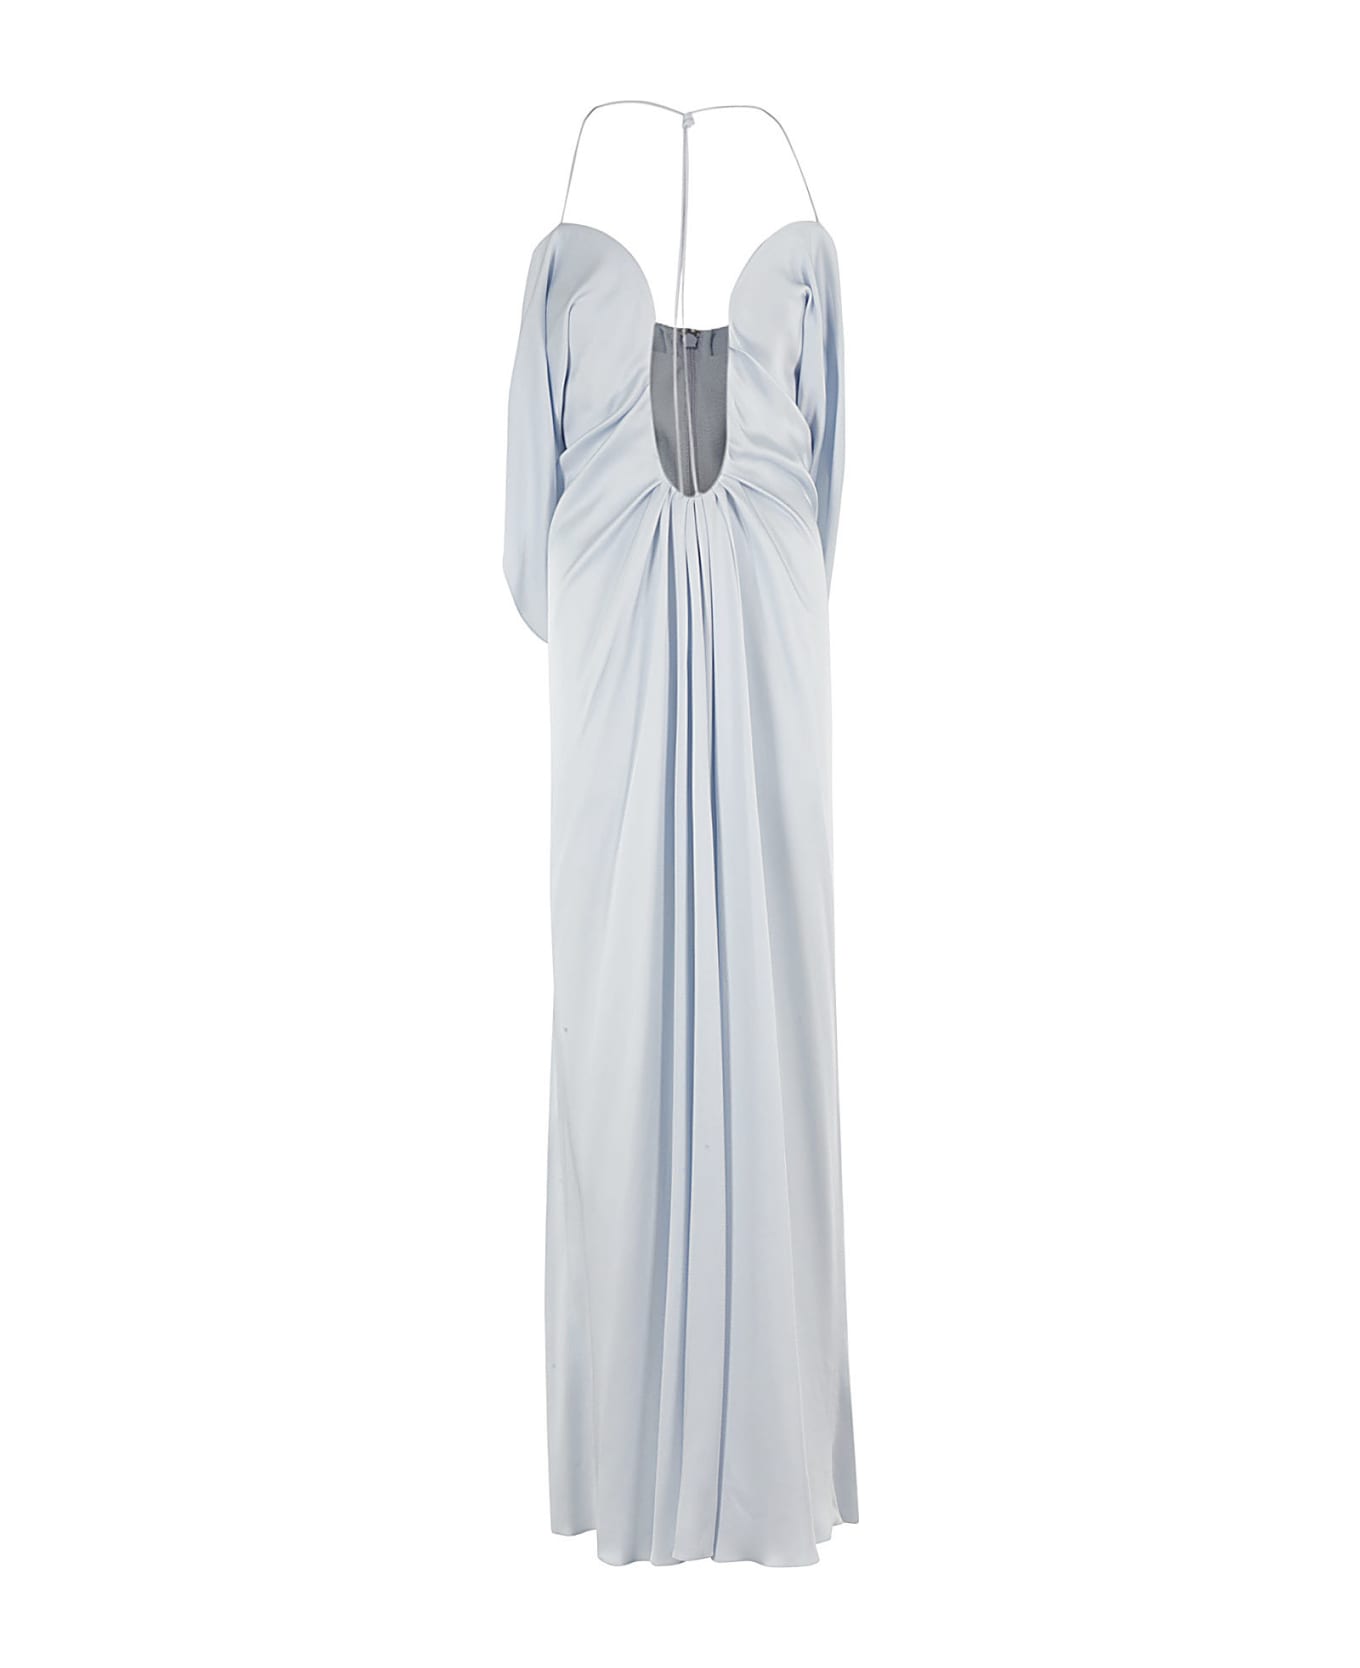 Victoria Beckham Frame Detail Cami Dress